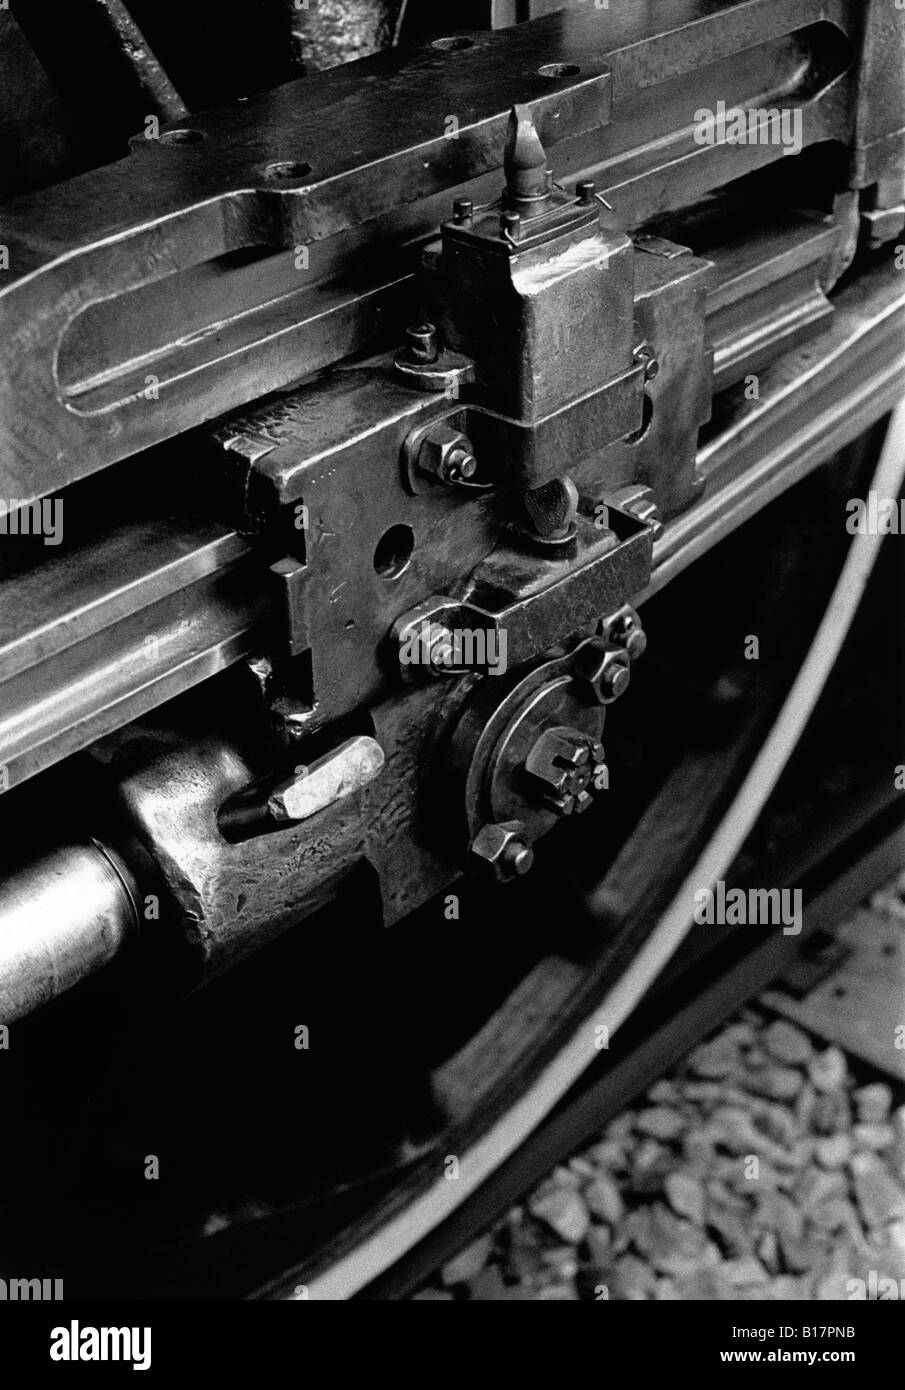 Valve gear of a steam locomotive Stock Photo